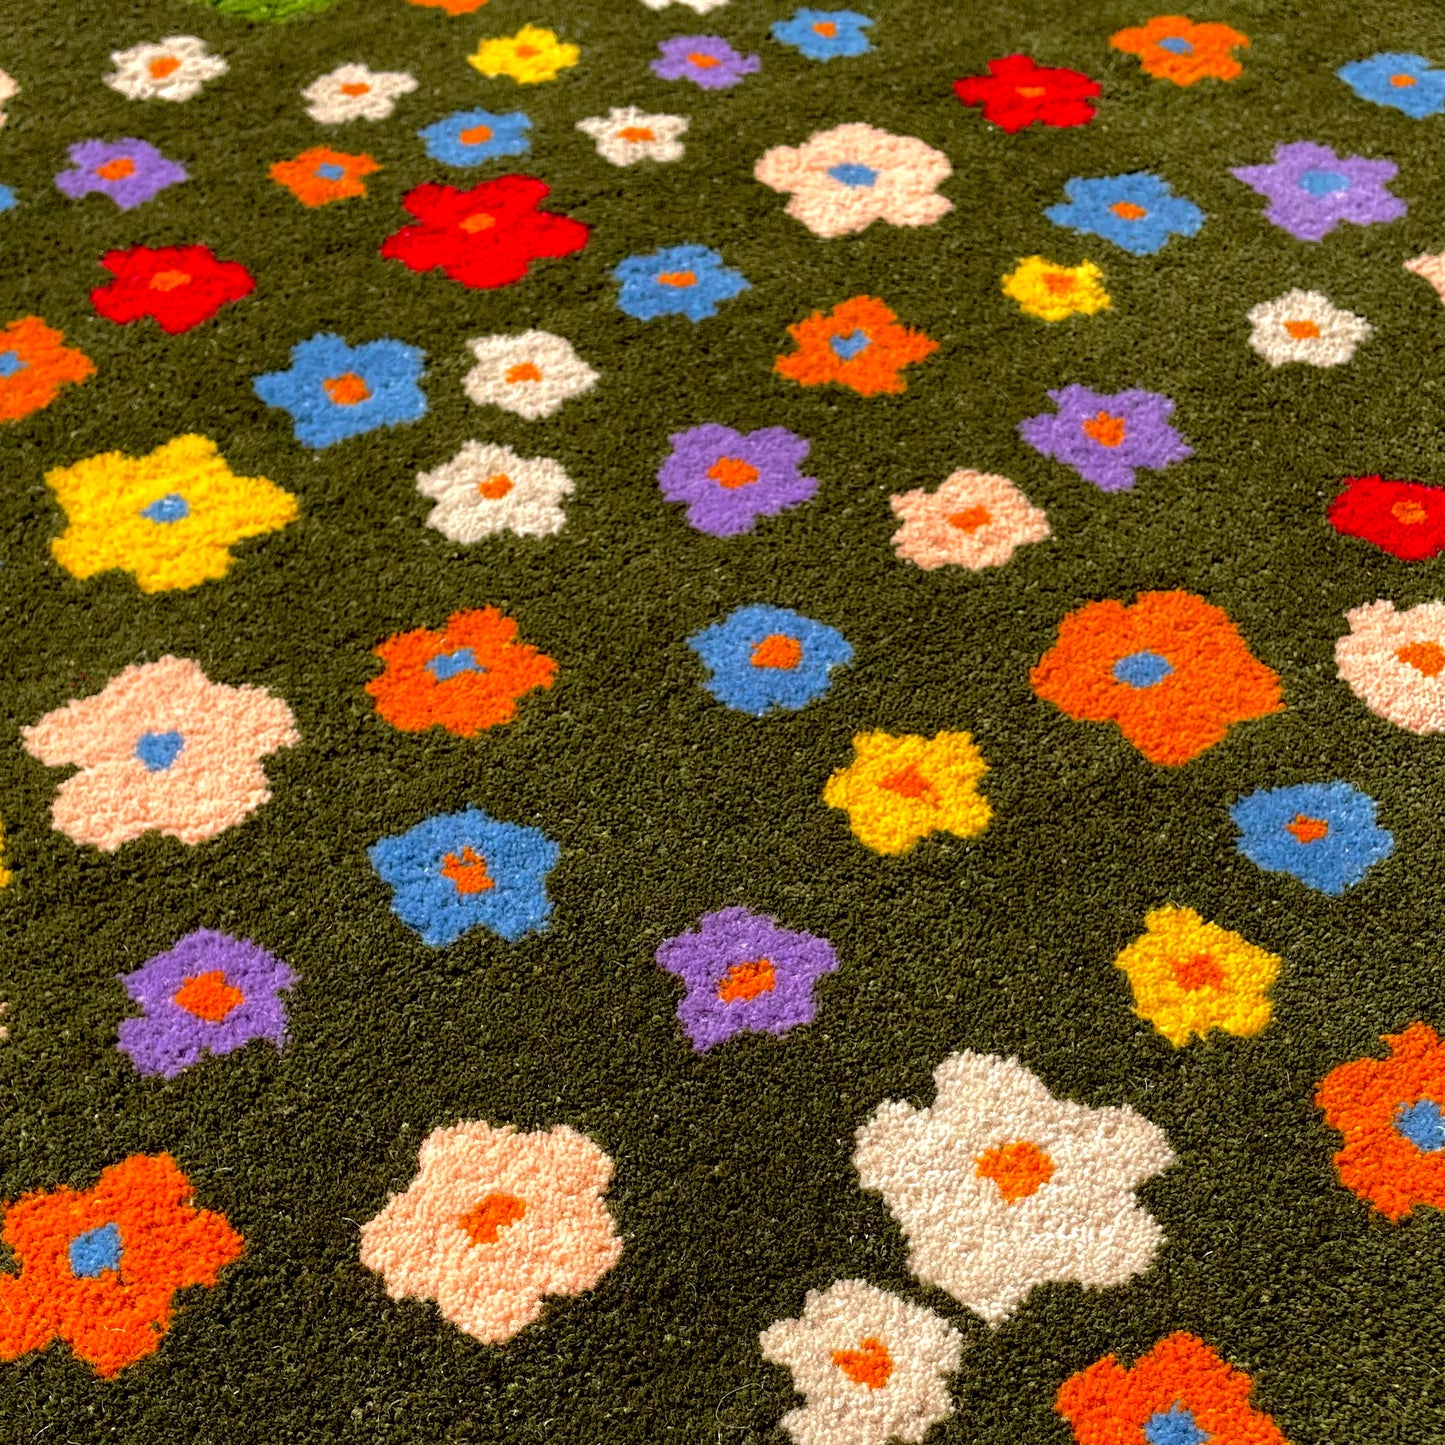 blossom bliss in garden rug zoom in